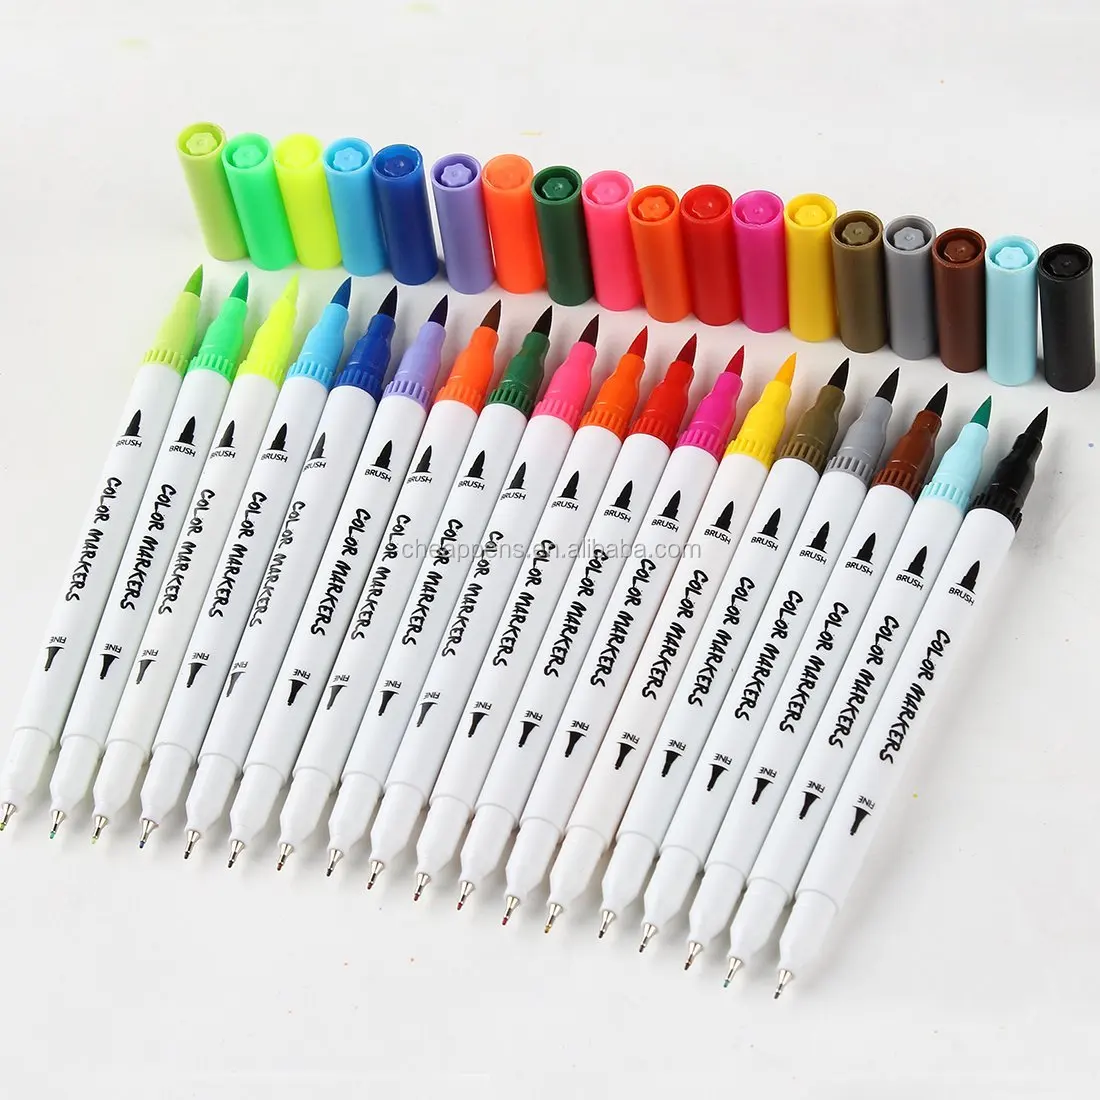  Tomaxis Watercolor Brush Pens Art Markers, Art